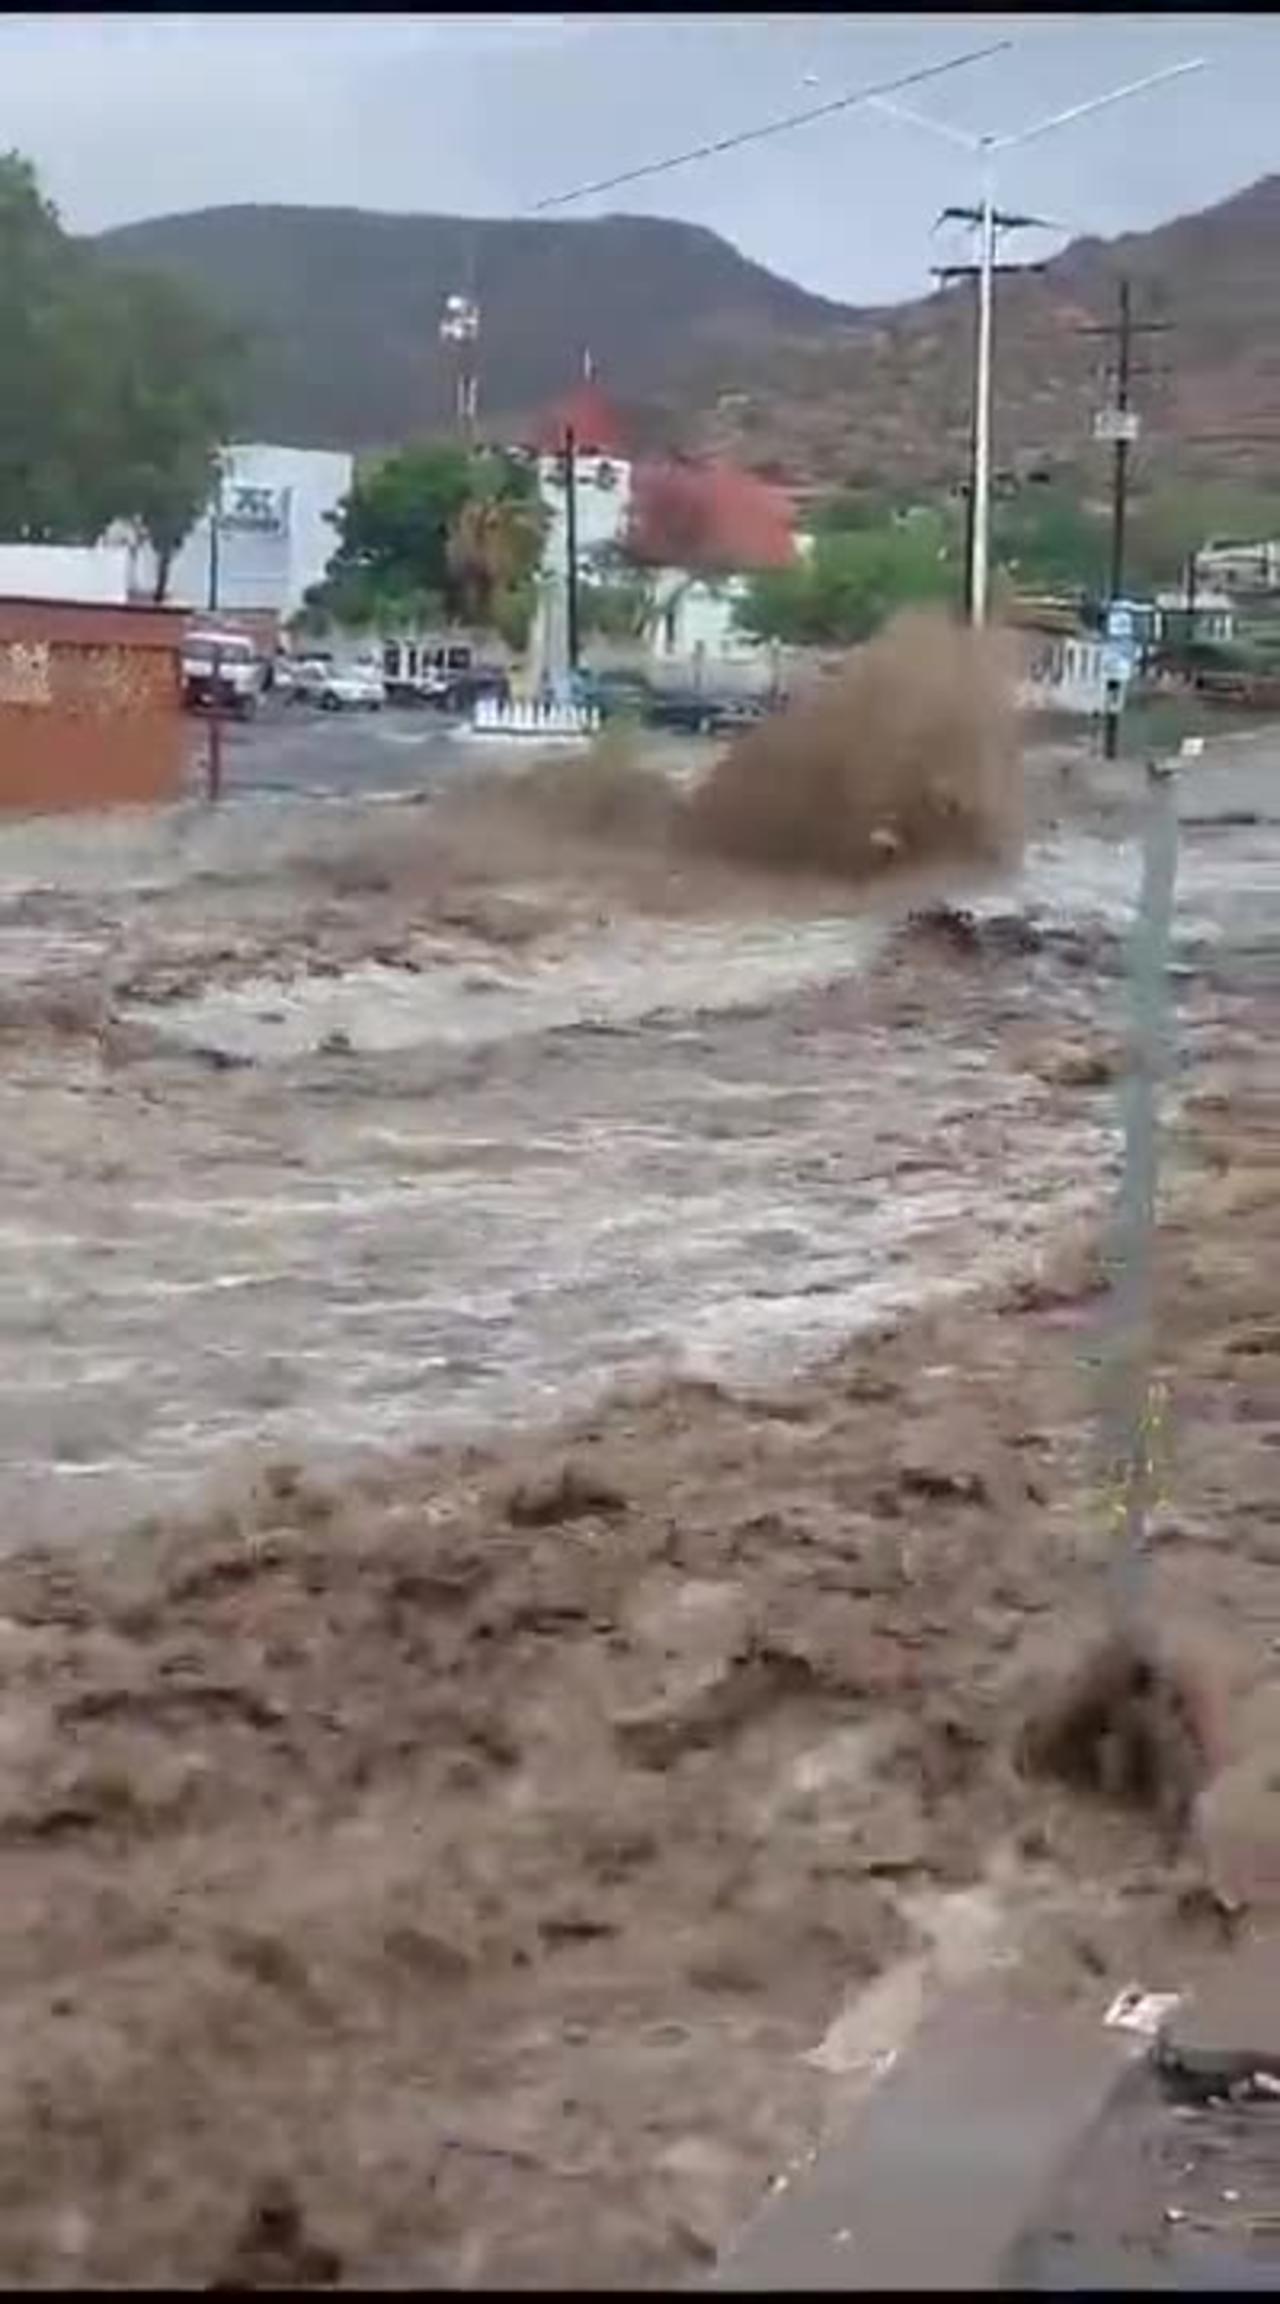 Hurricane Hilary brings major flooding around Santa Rosalía, Baja California Sur, Mexico. 👀